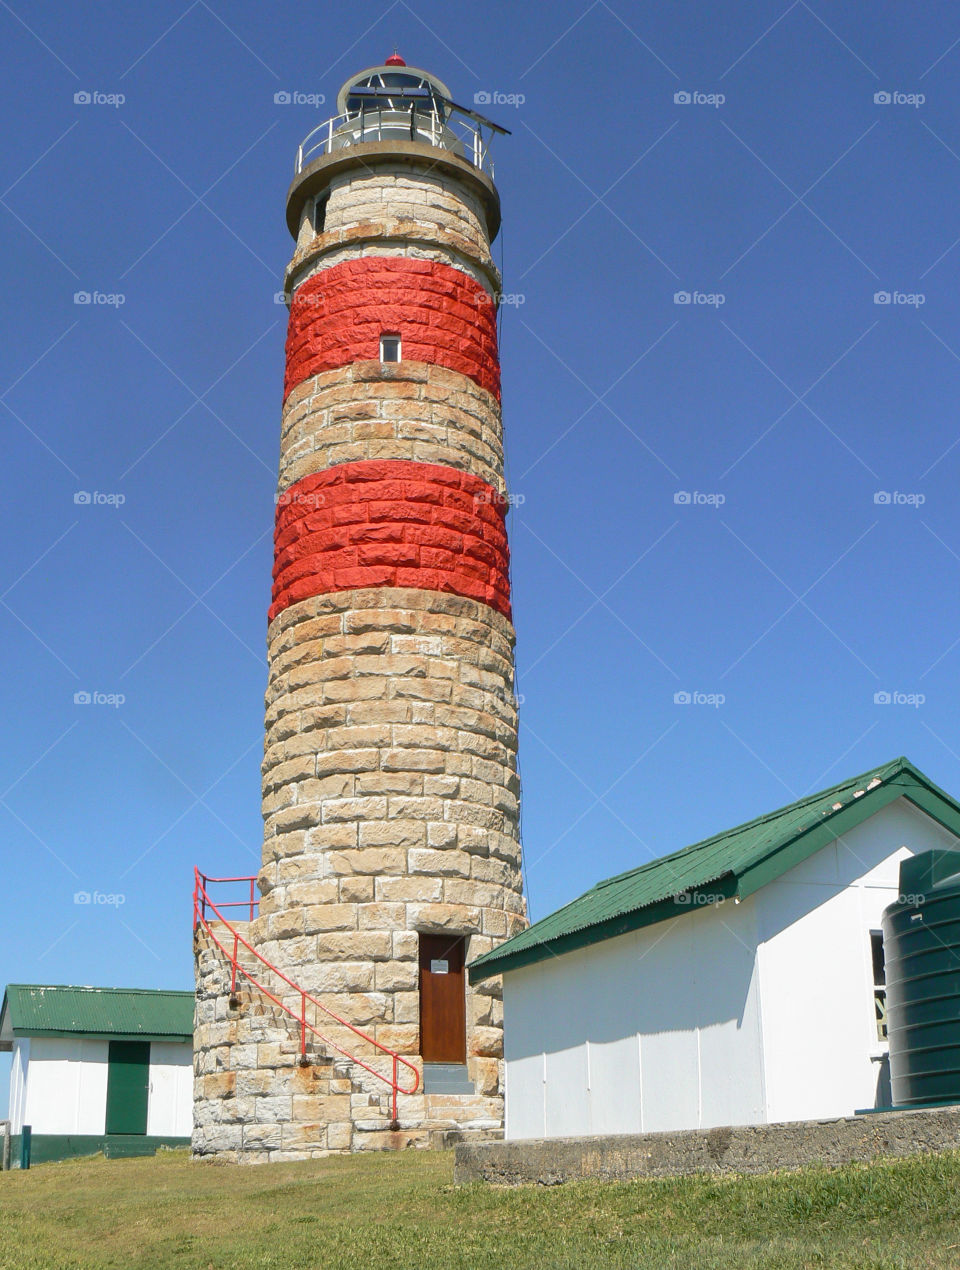 Moreton Island Lighthouse
Australia